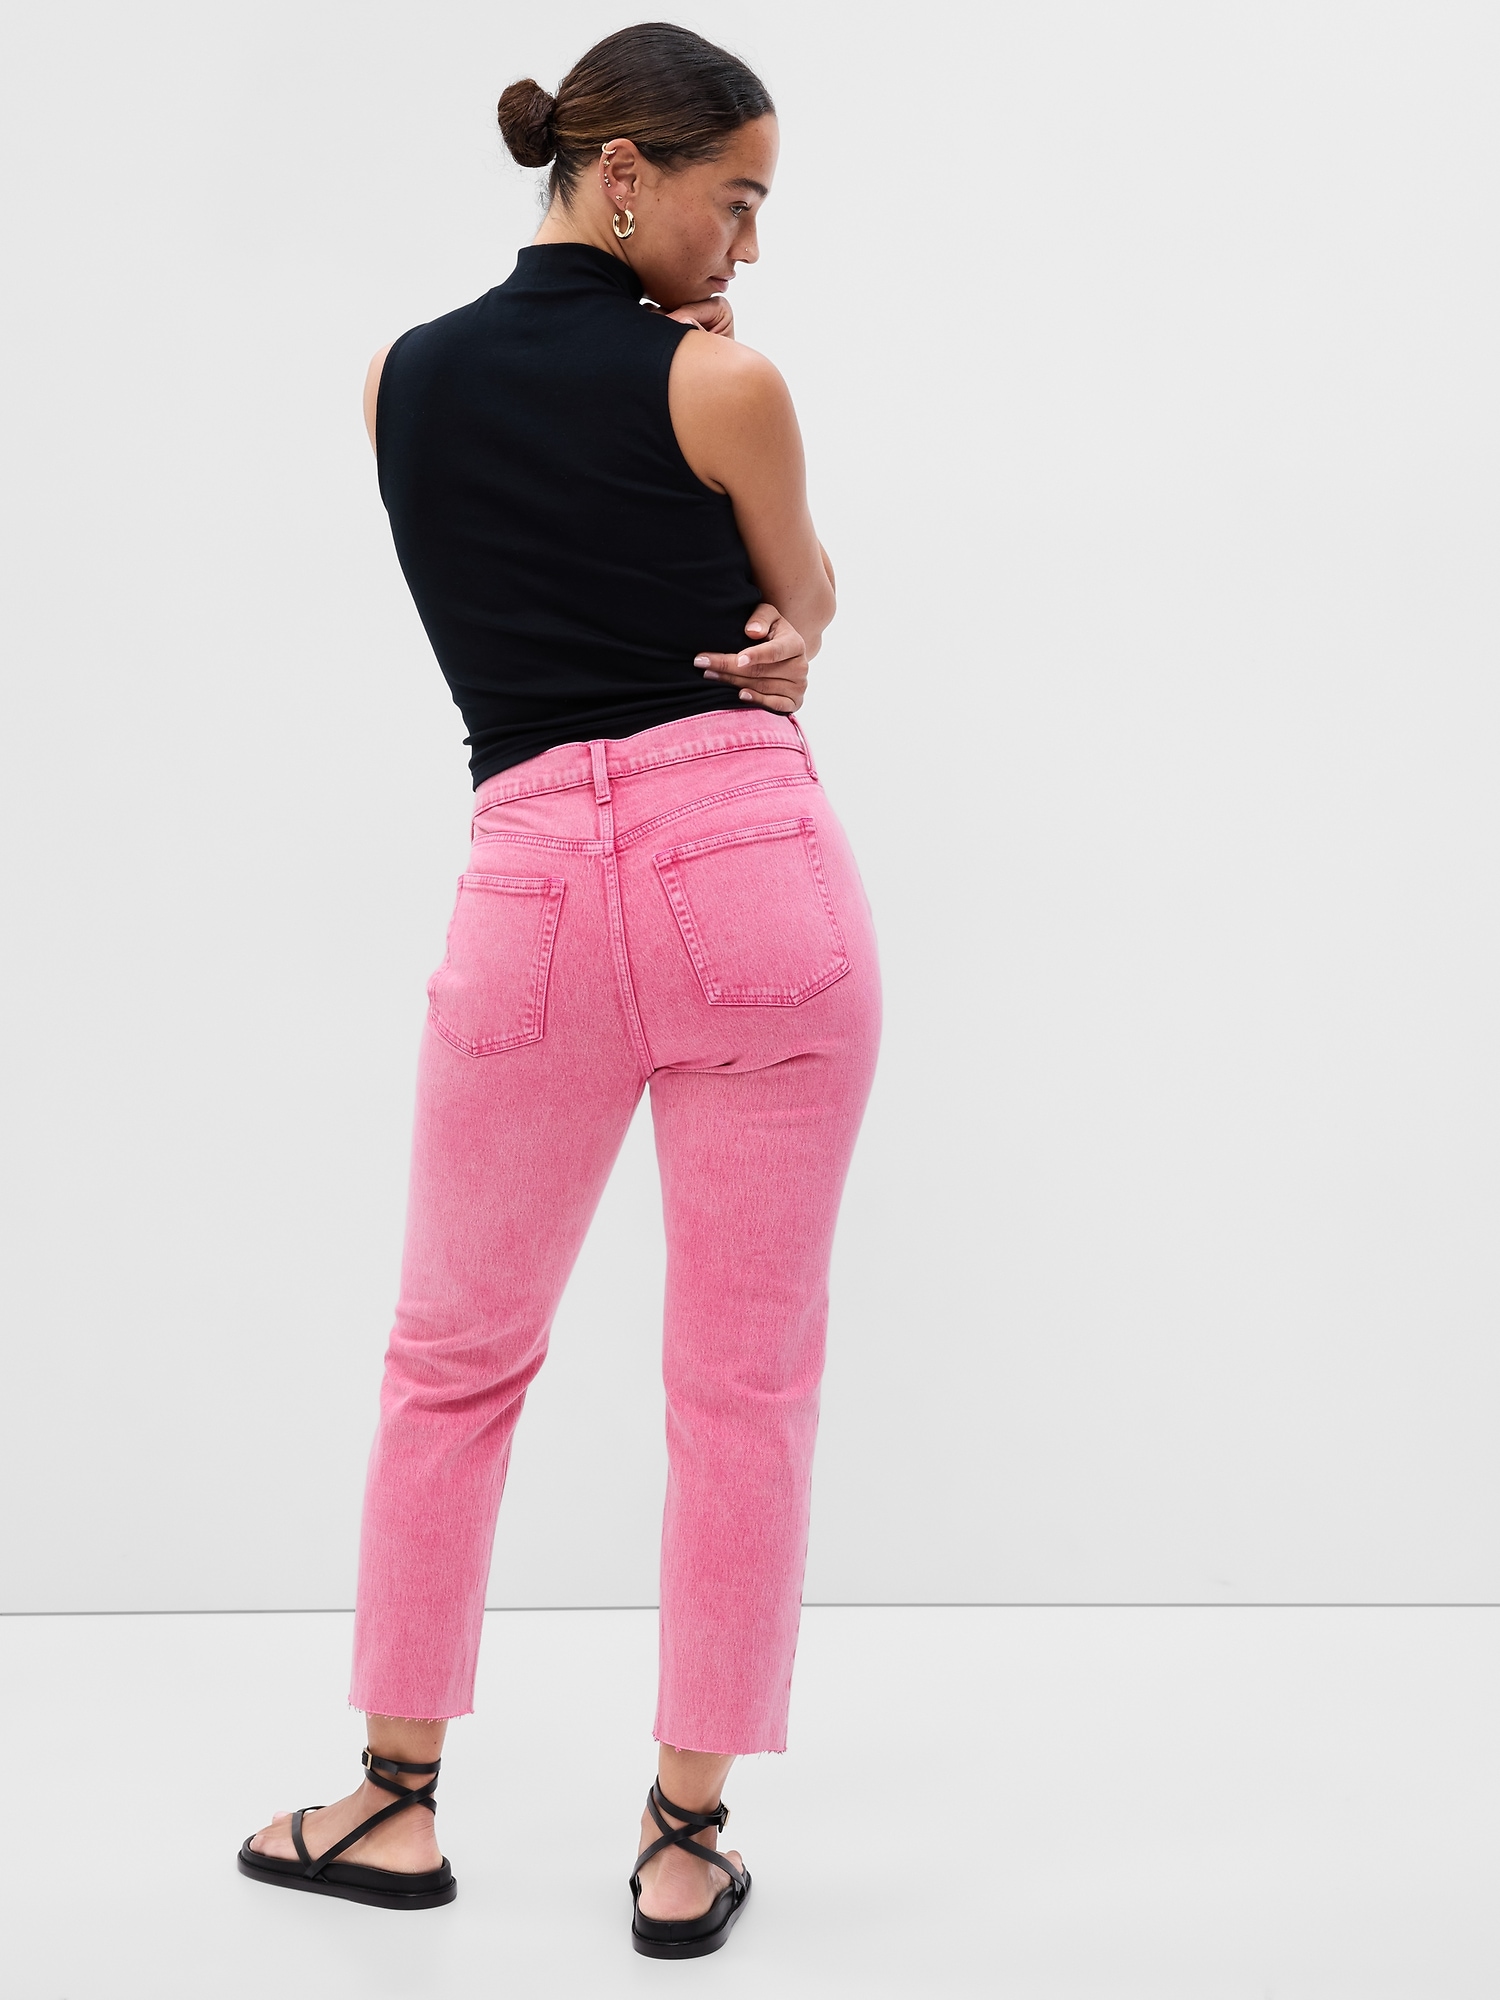 GAP, Jeans, Gap Fuchsia Pink Jeggings Skinny Jeans